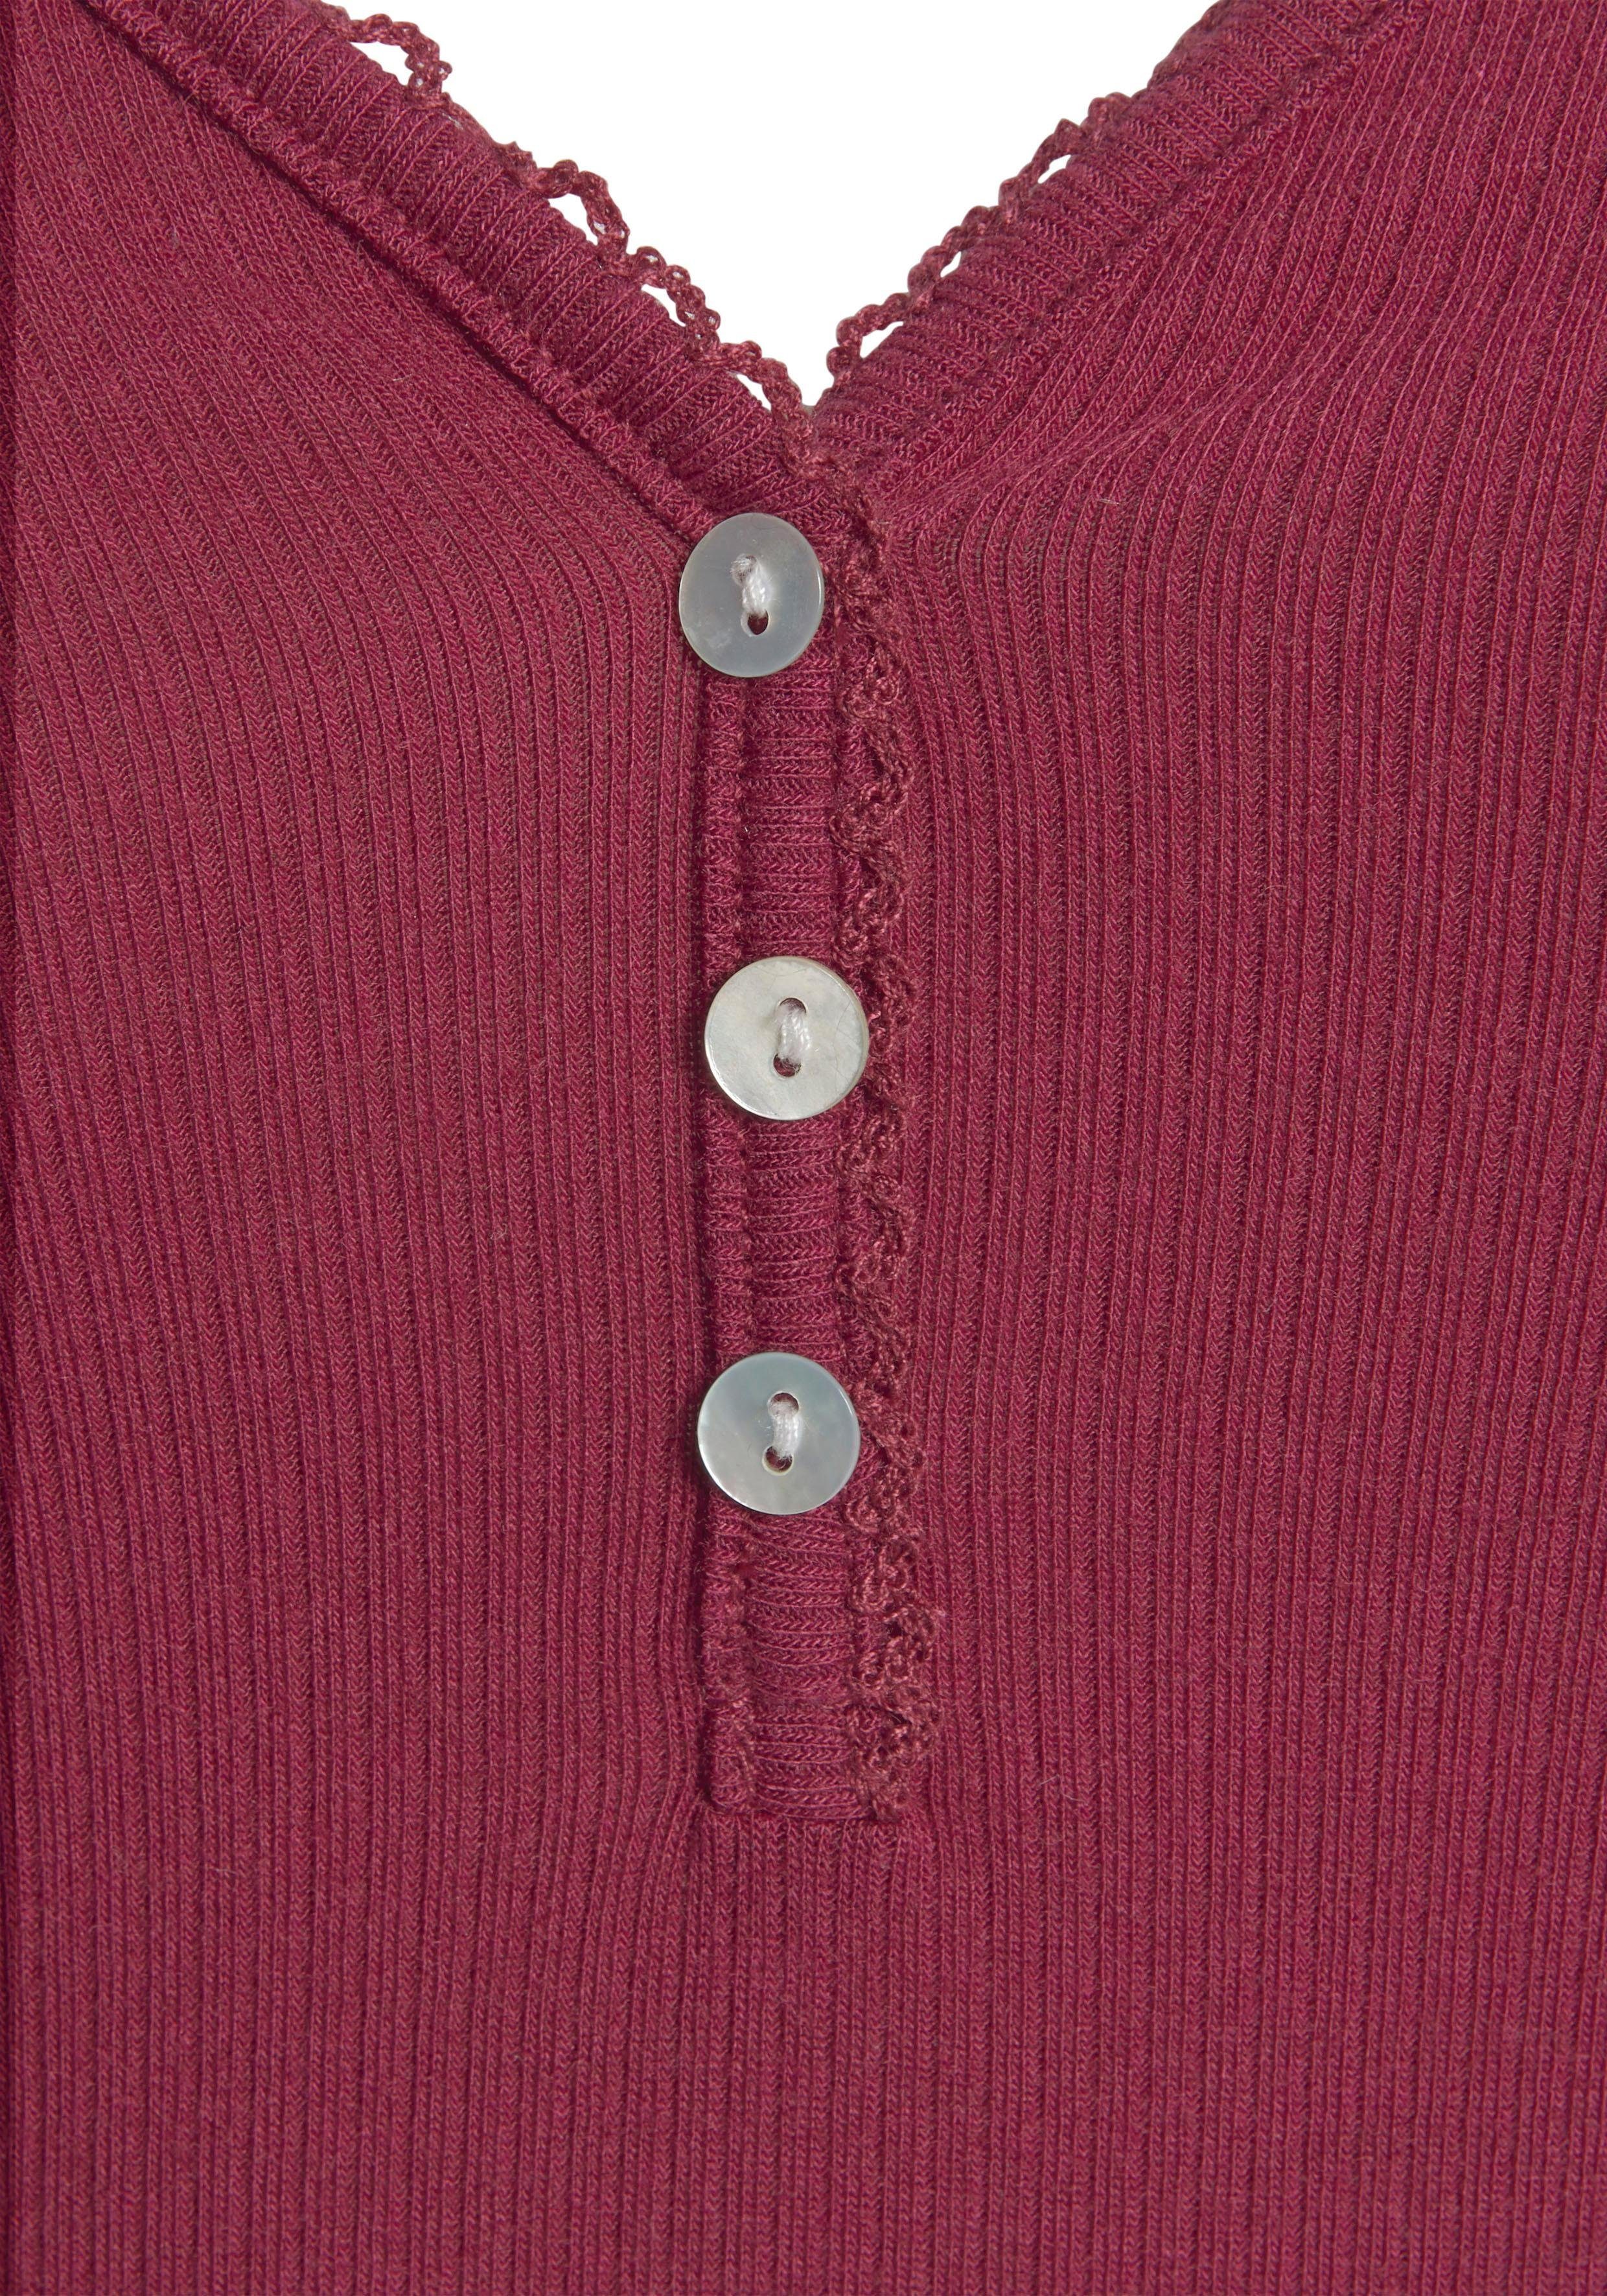 s.Oliver Langarmshirt aus geripptem Stoff mit Zier-Knopfleiste bordeaux